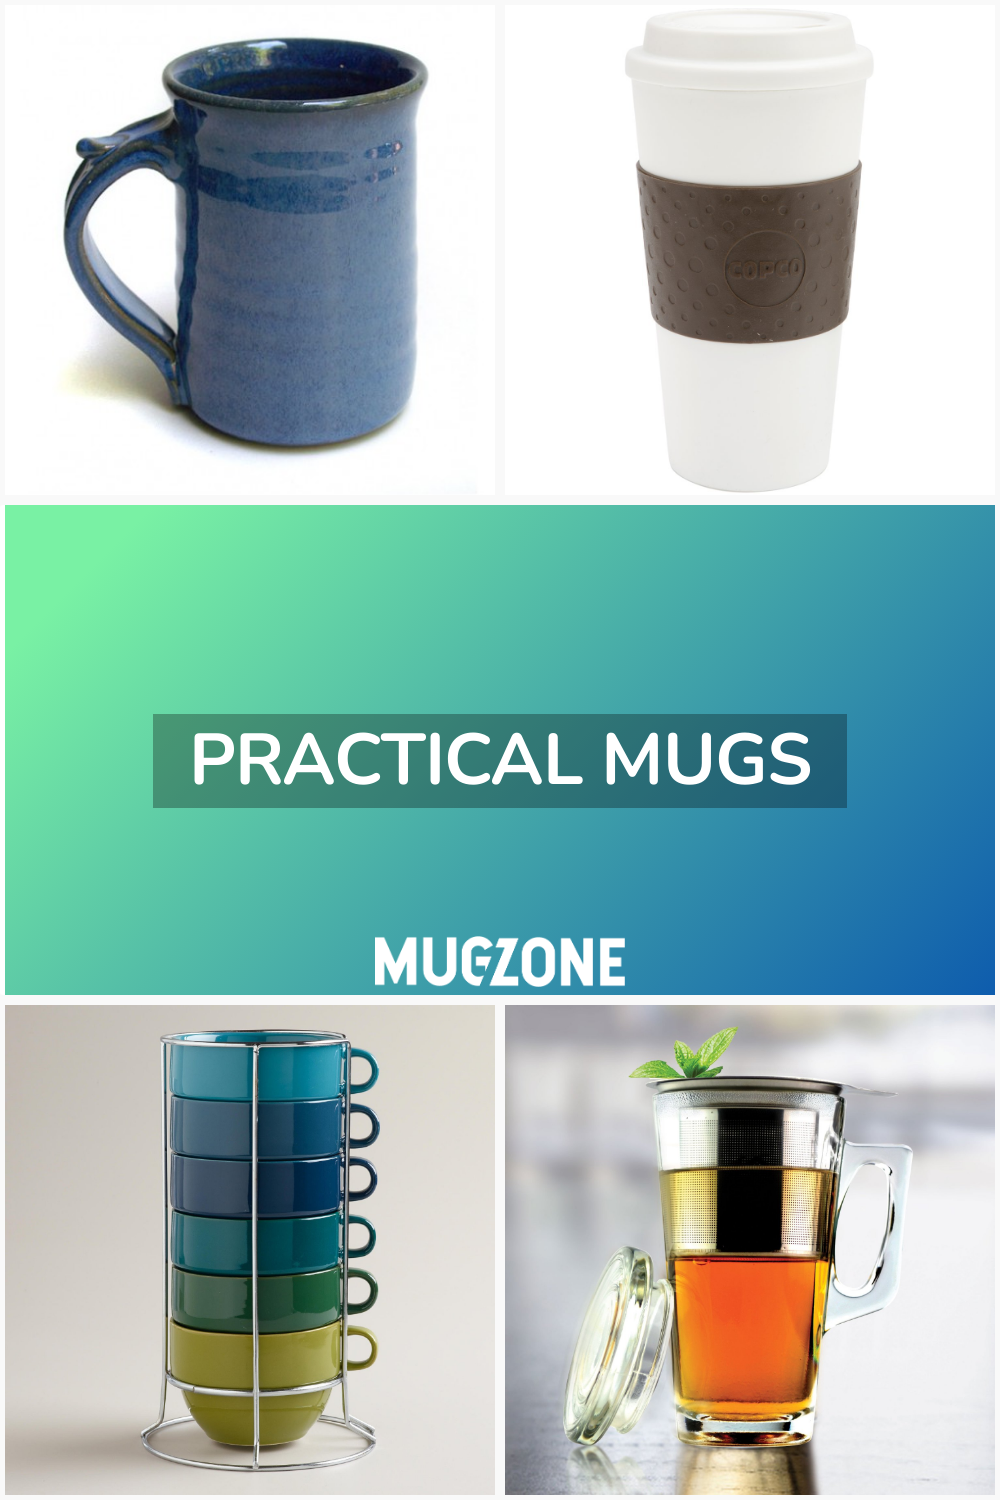 Practical Mugs // Mug Zone